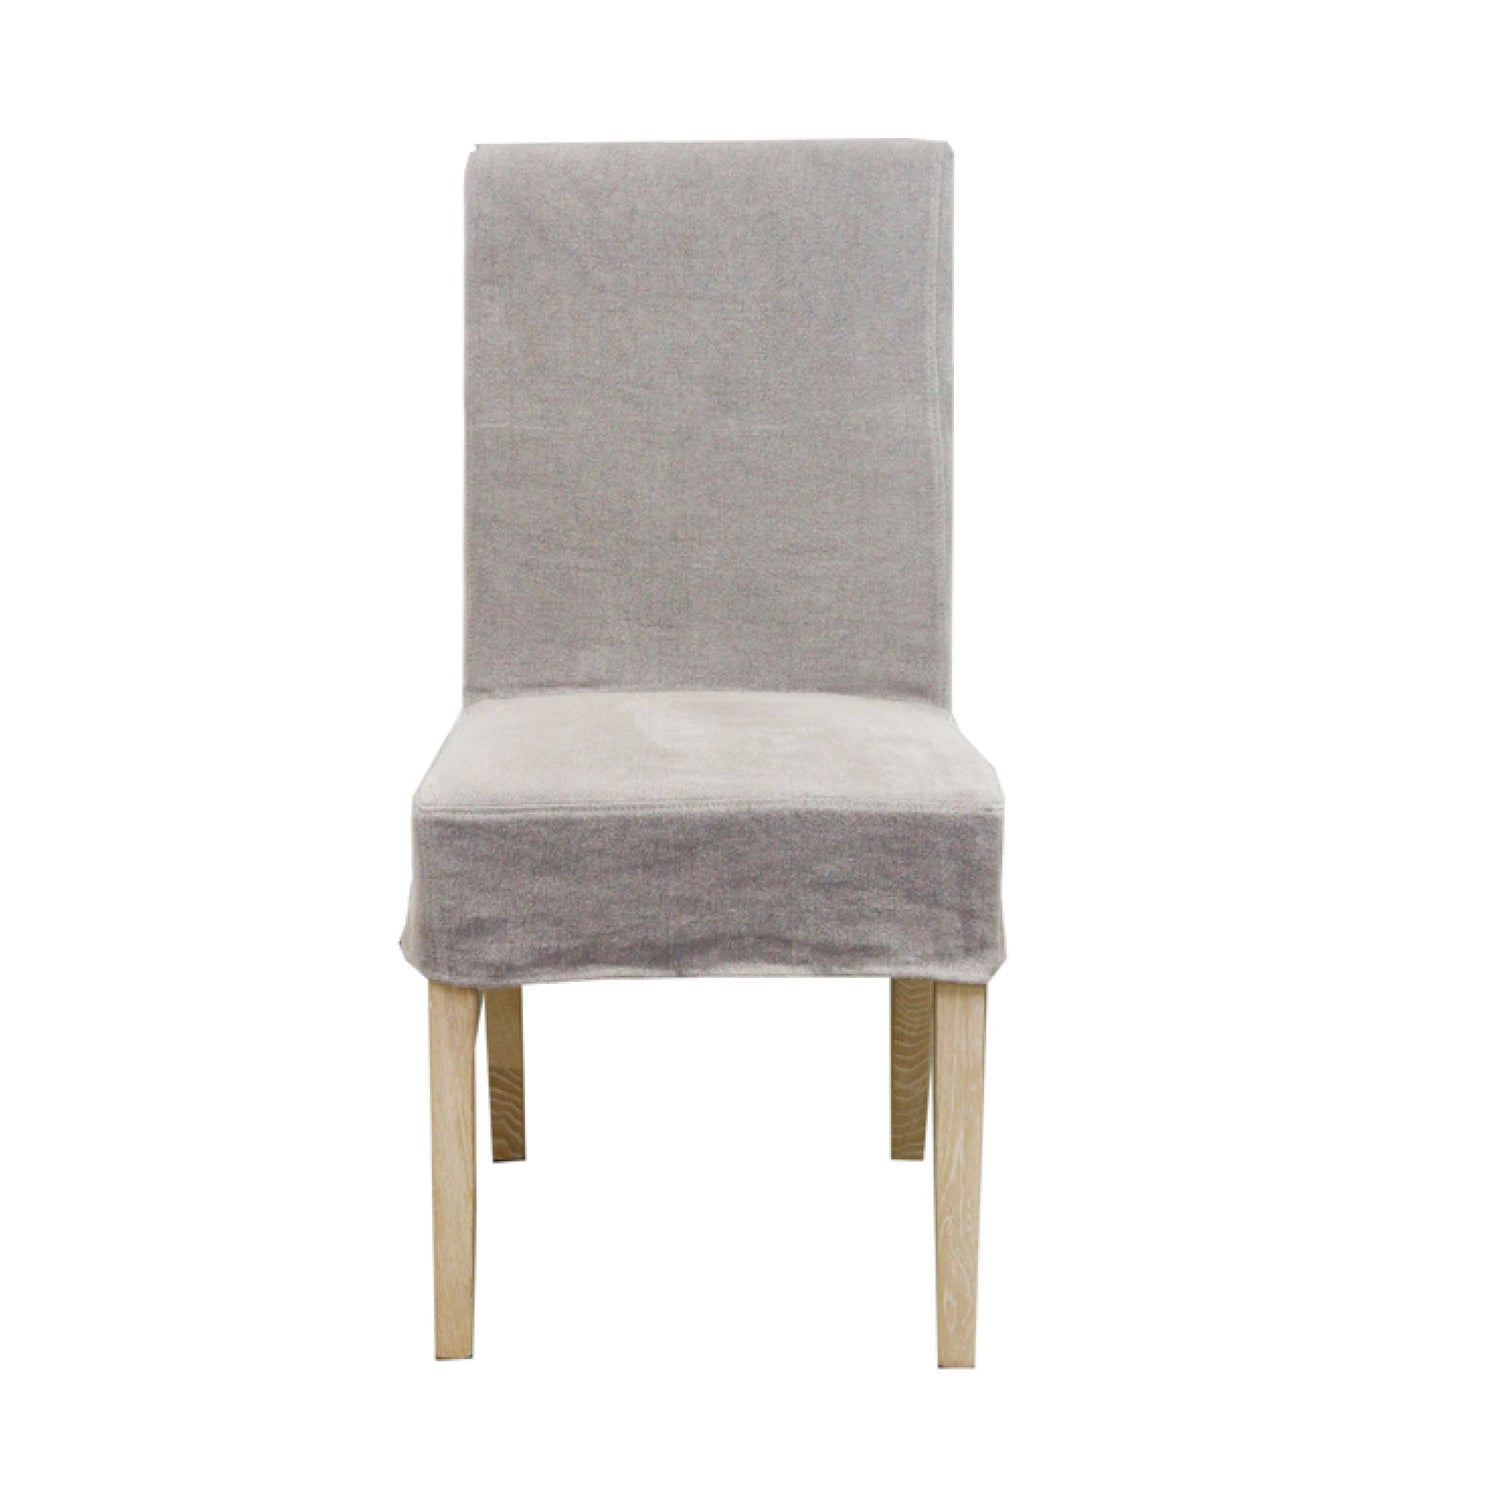 Collaroy High Back Chair Dining Furniture Beachwood Designs Shale Linen 